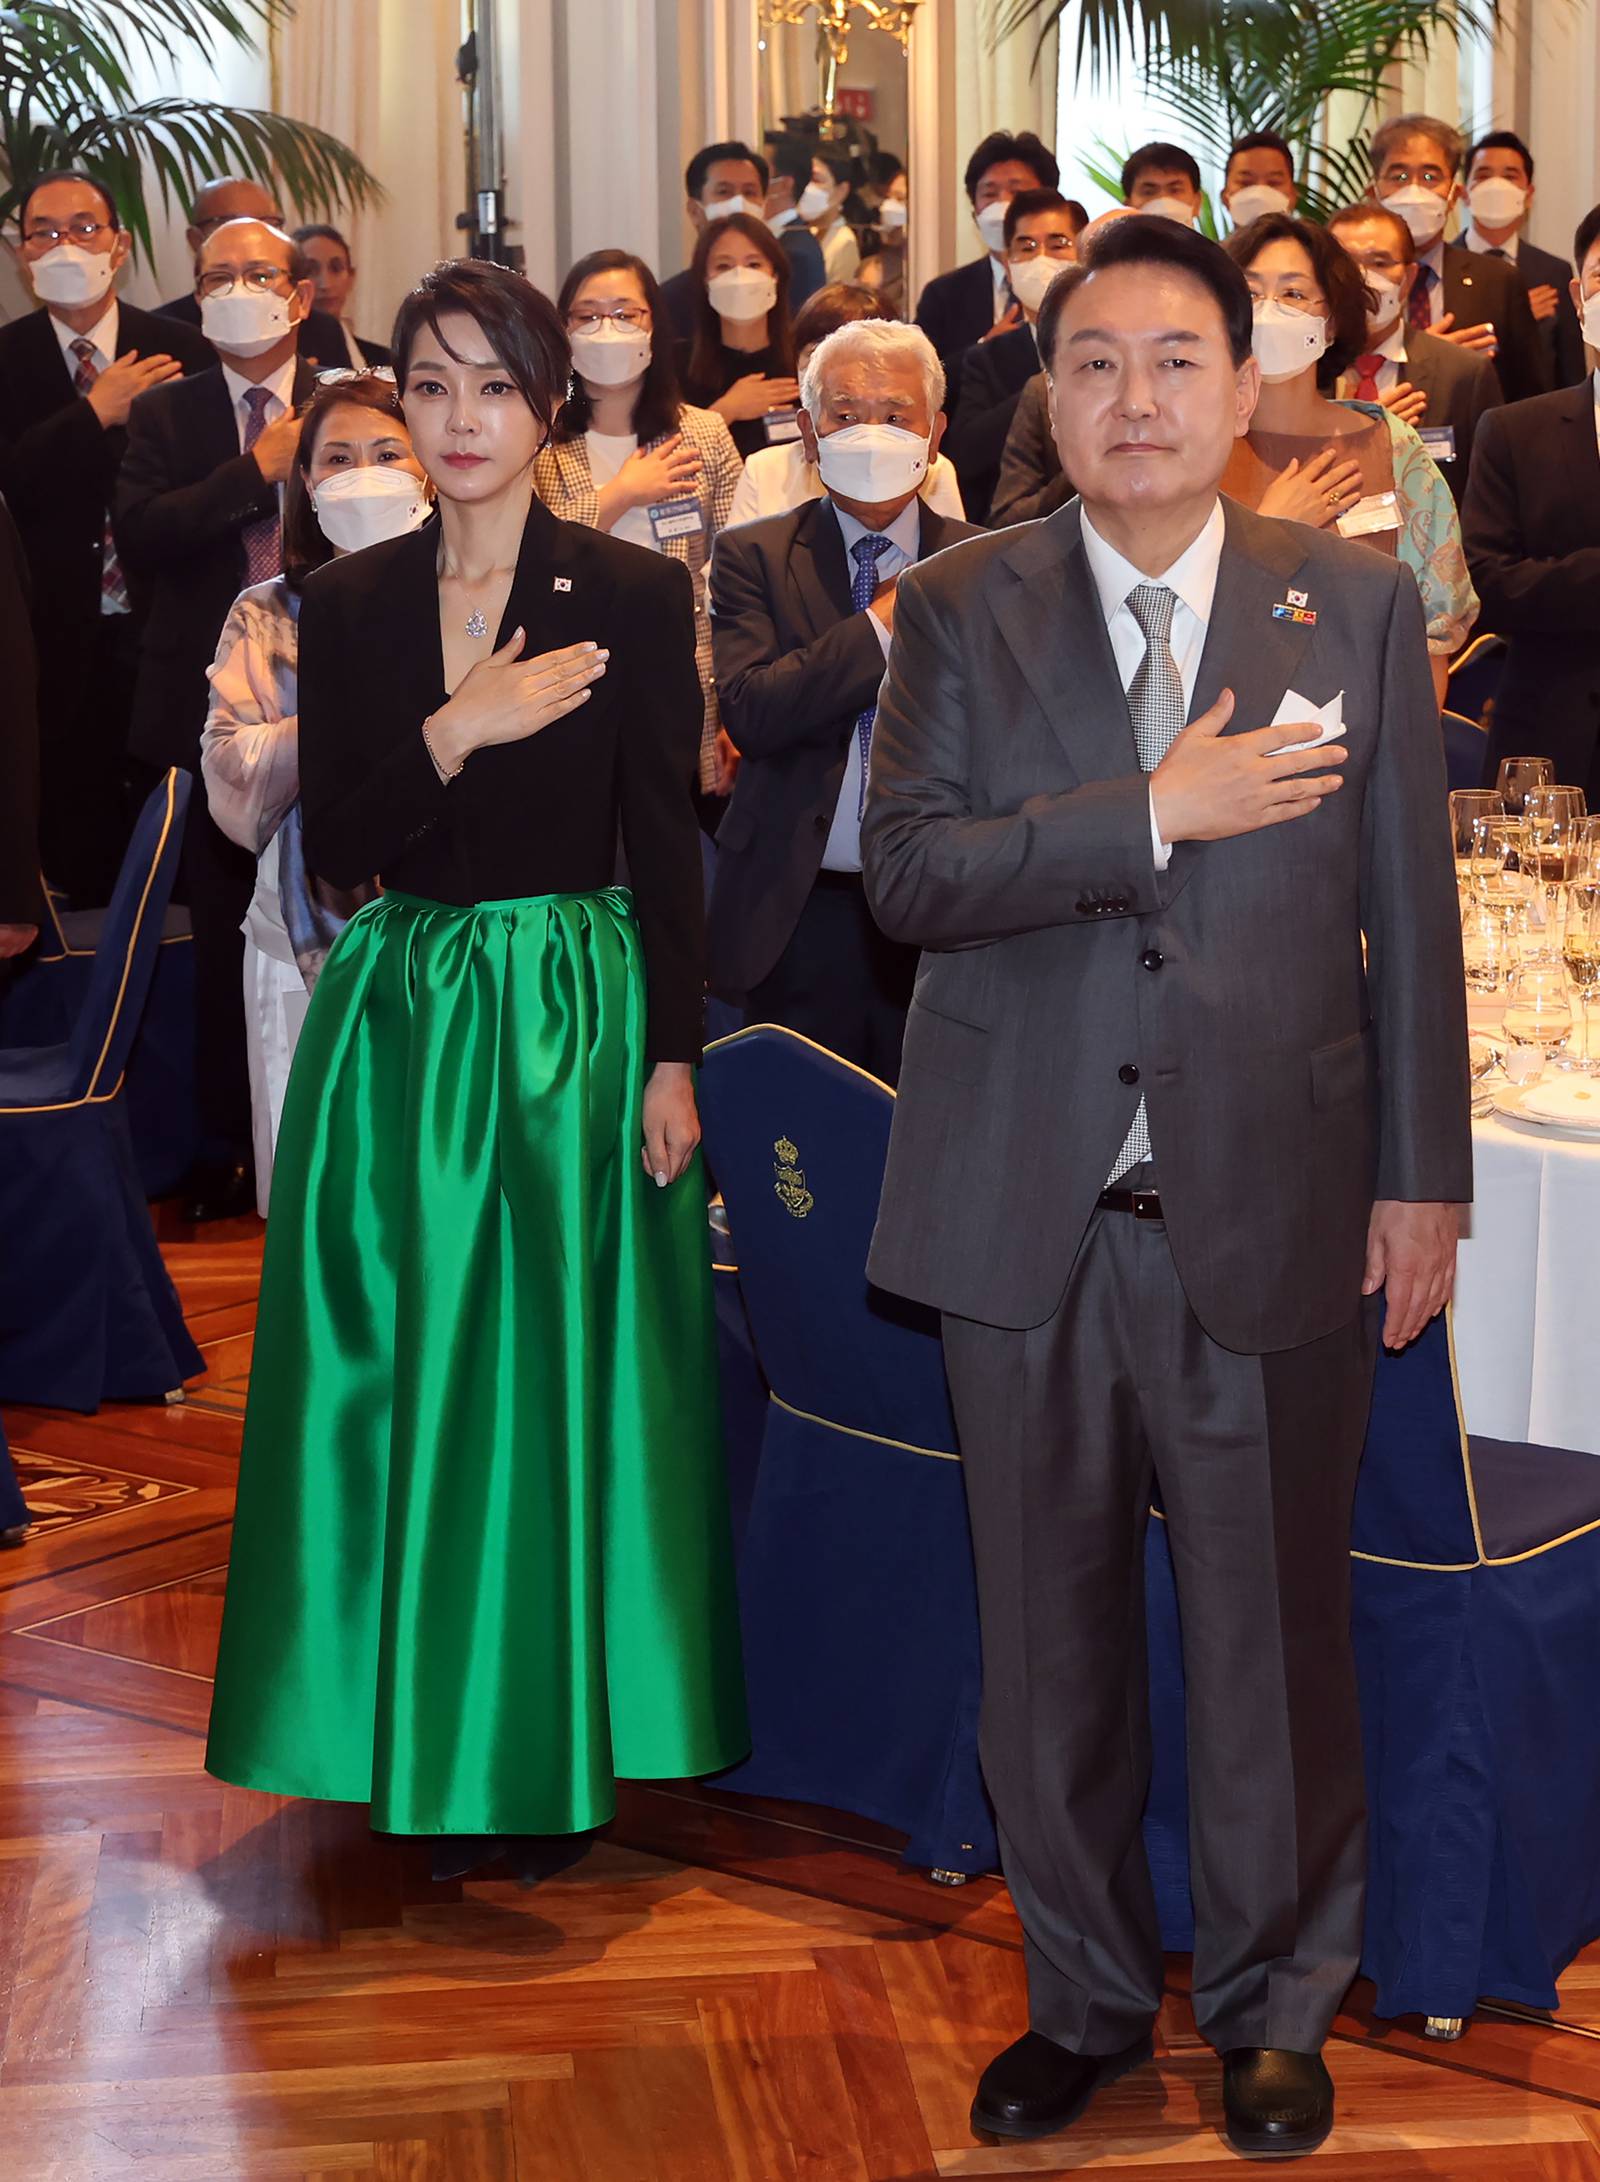 South Korea's first lady Kim Keon Hee makes fashionable debut in Abu Dhabi